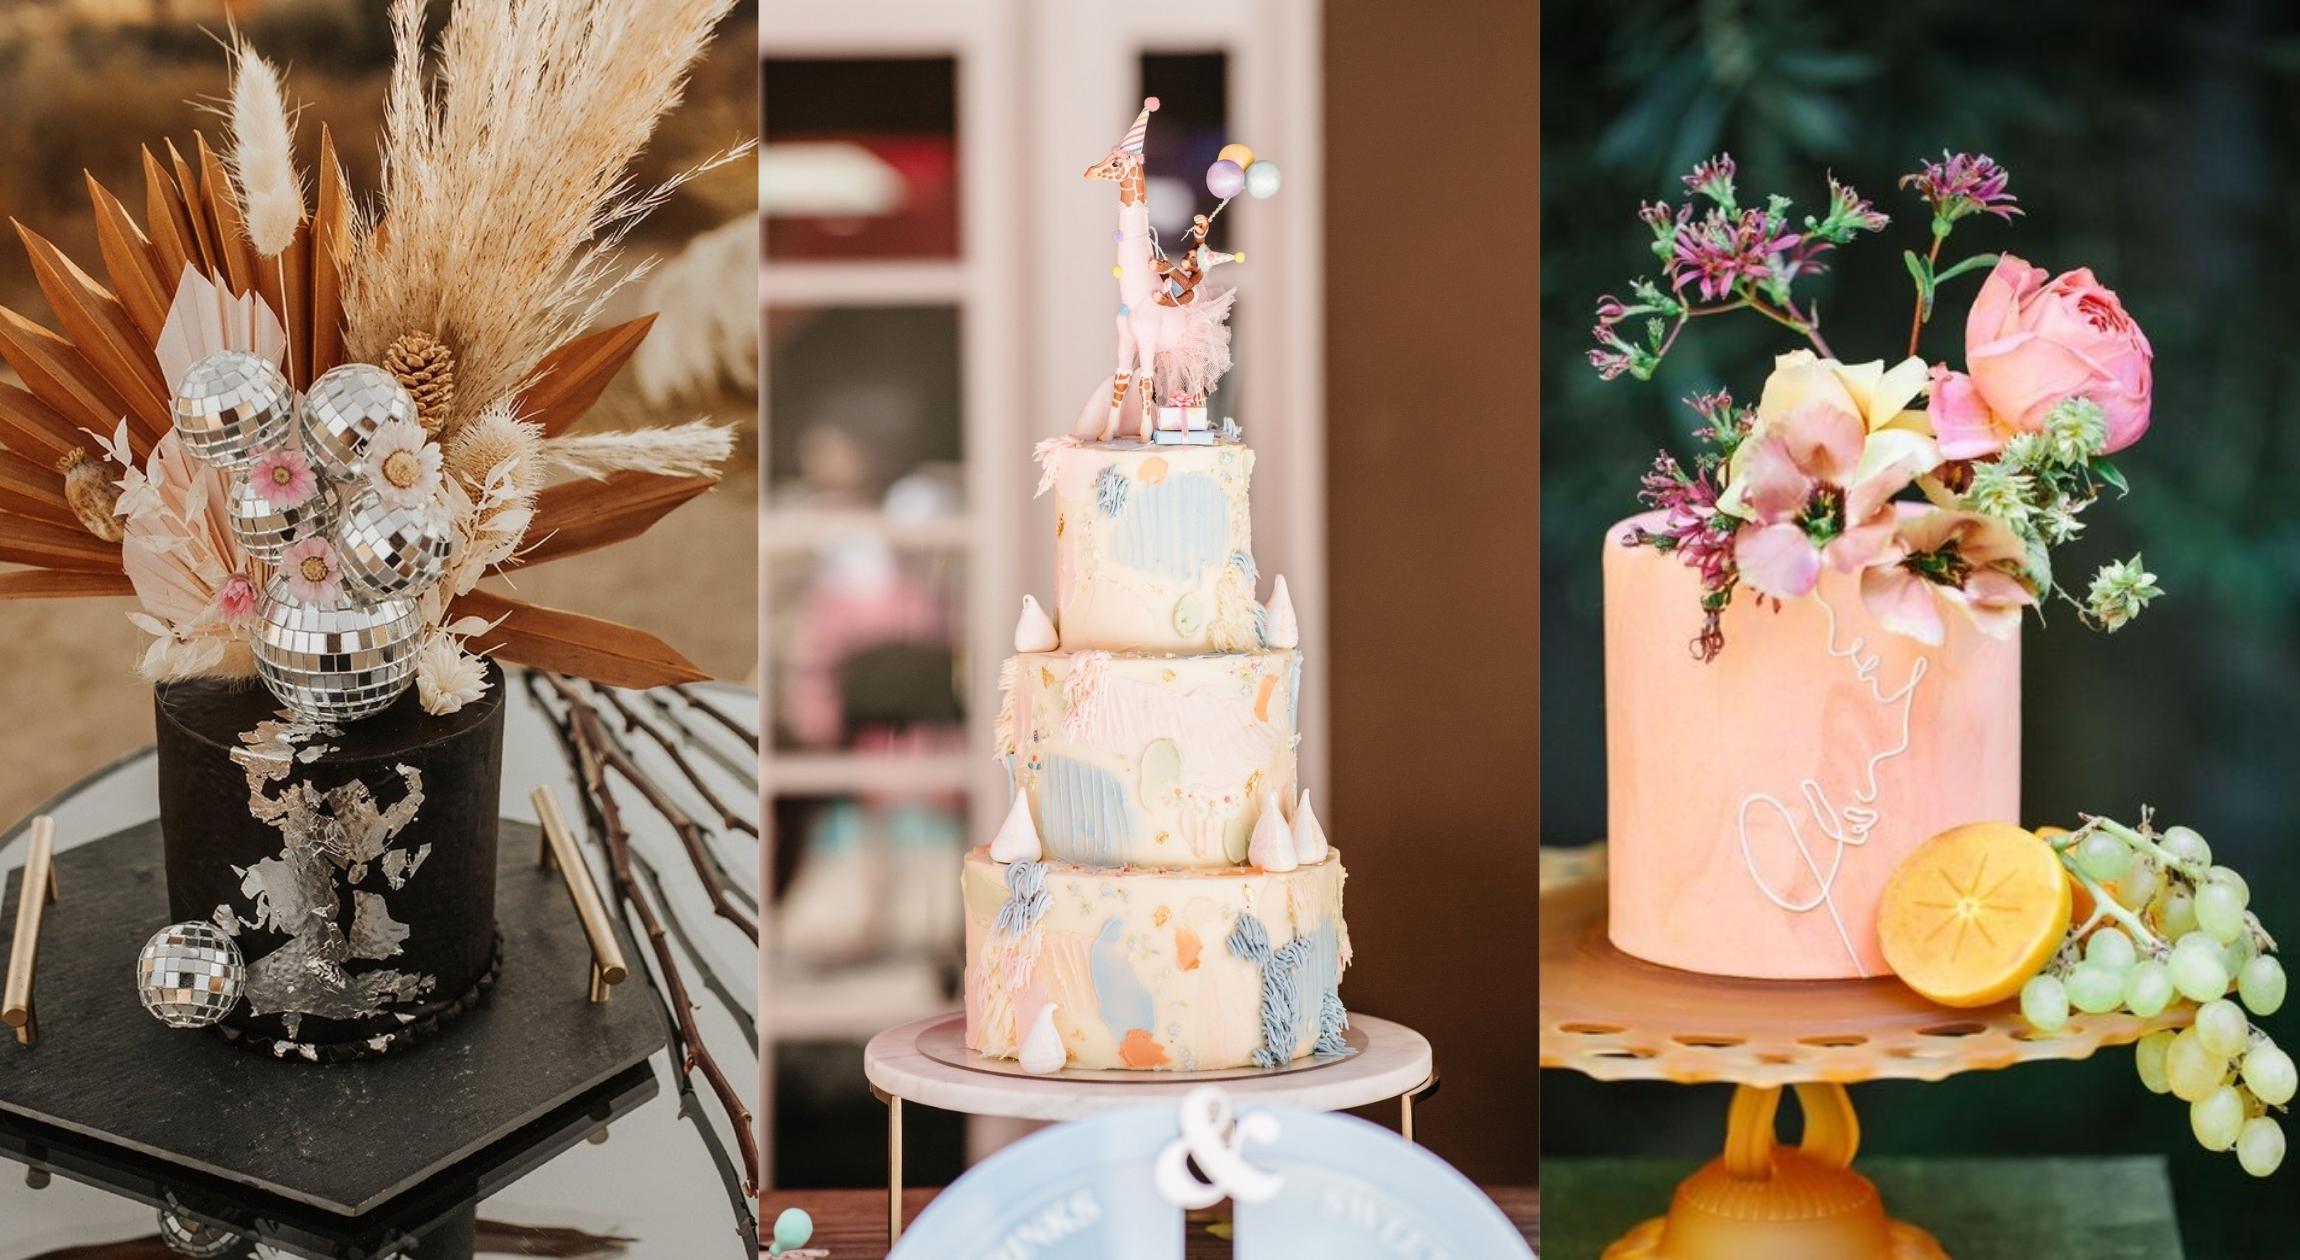 Three different wedding cakes